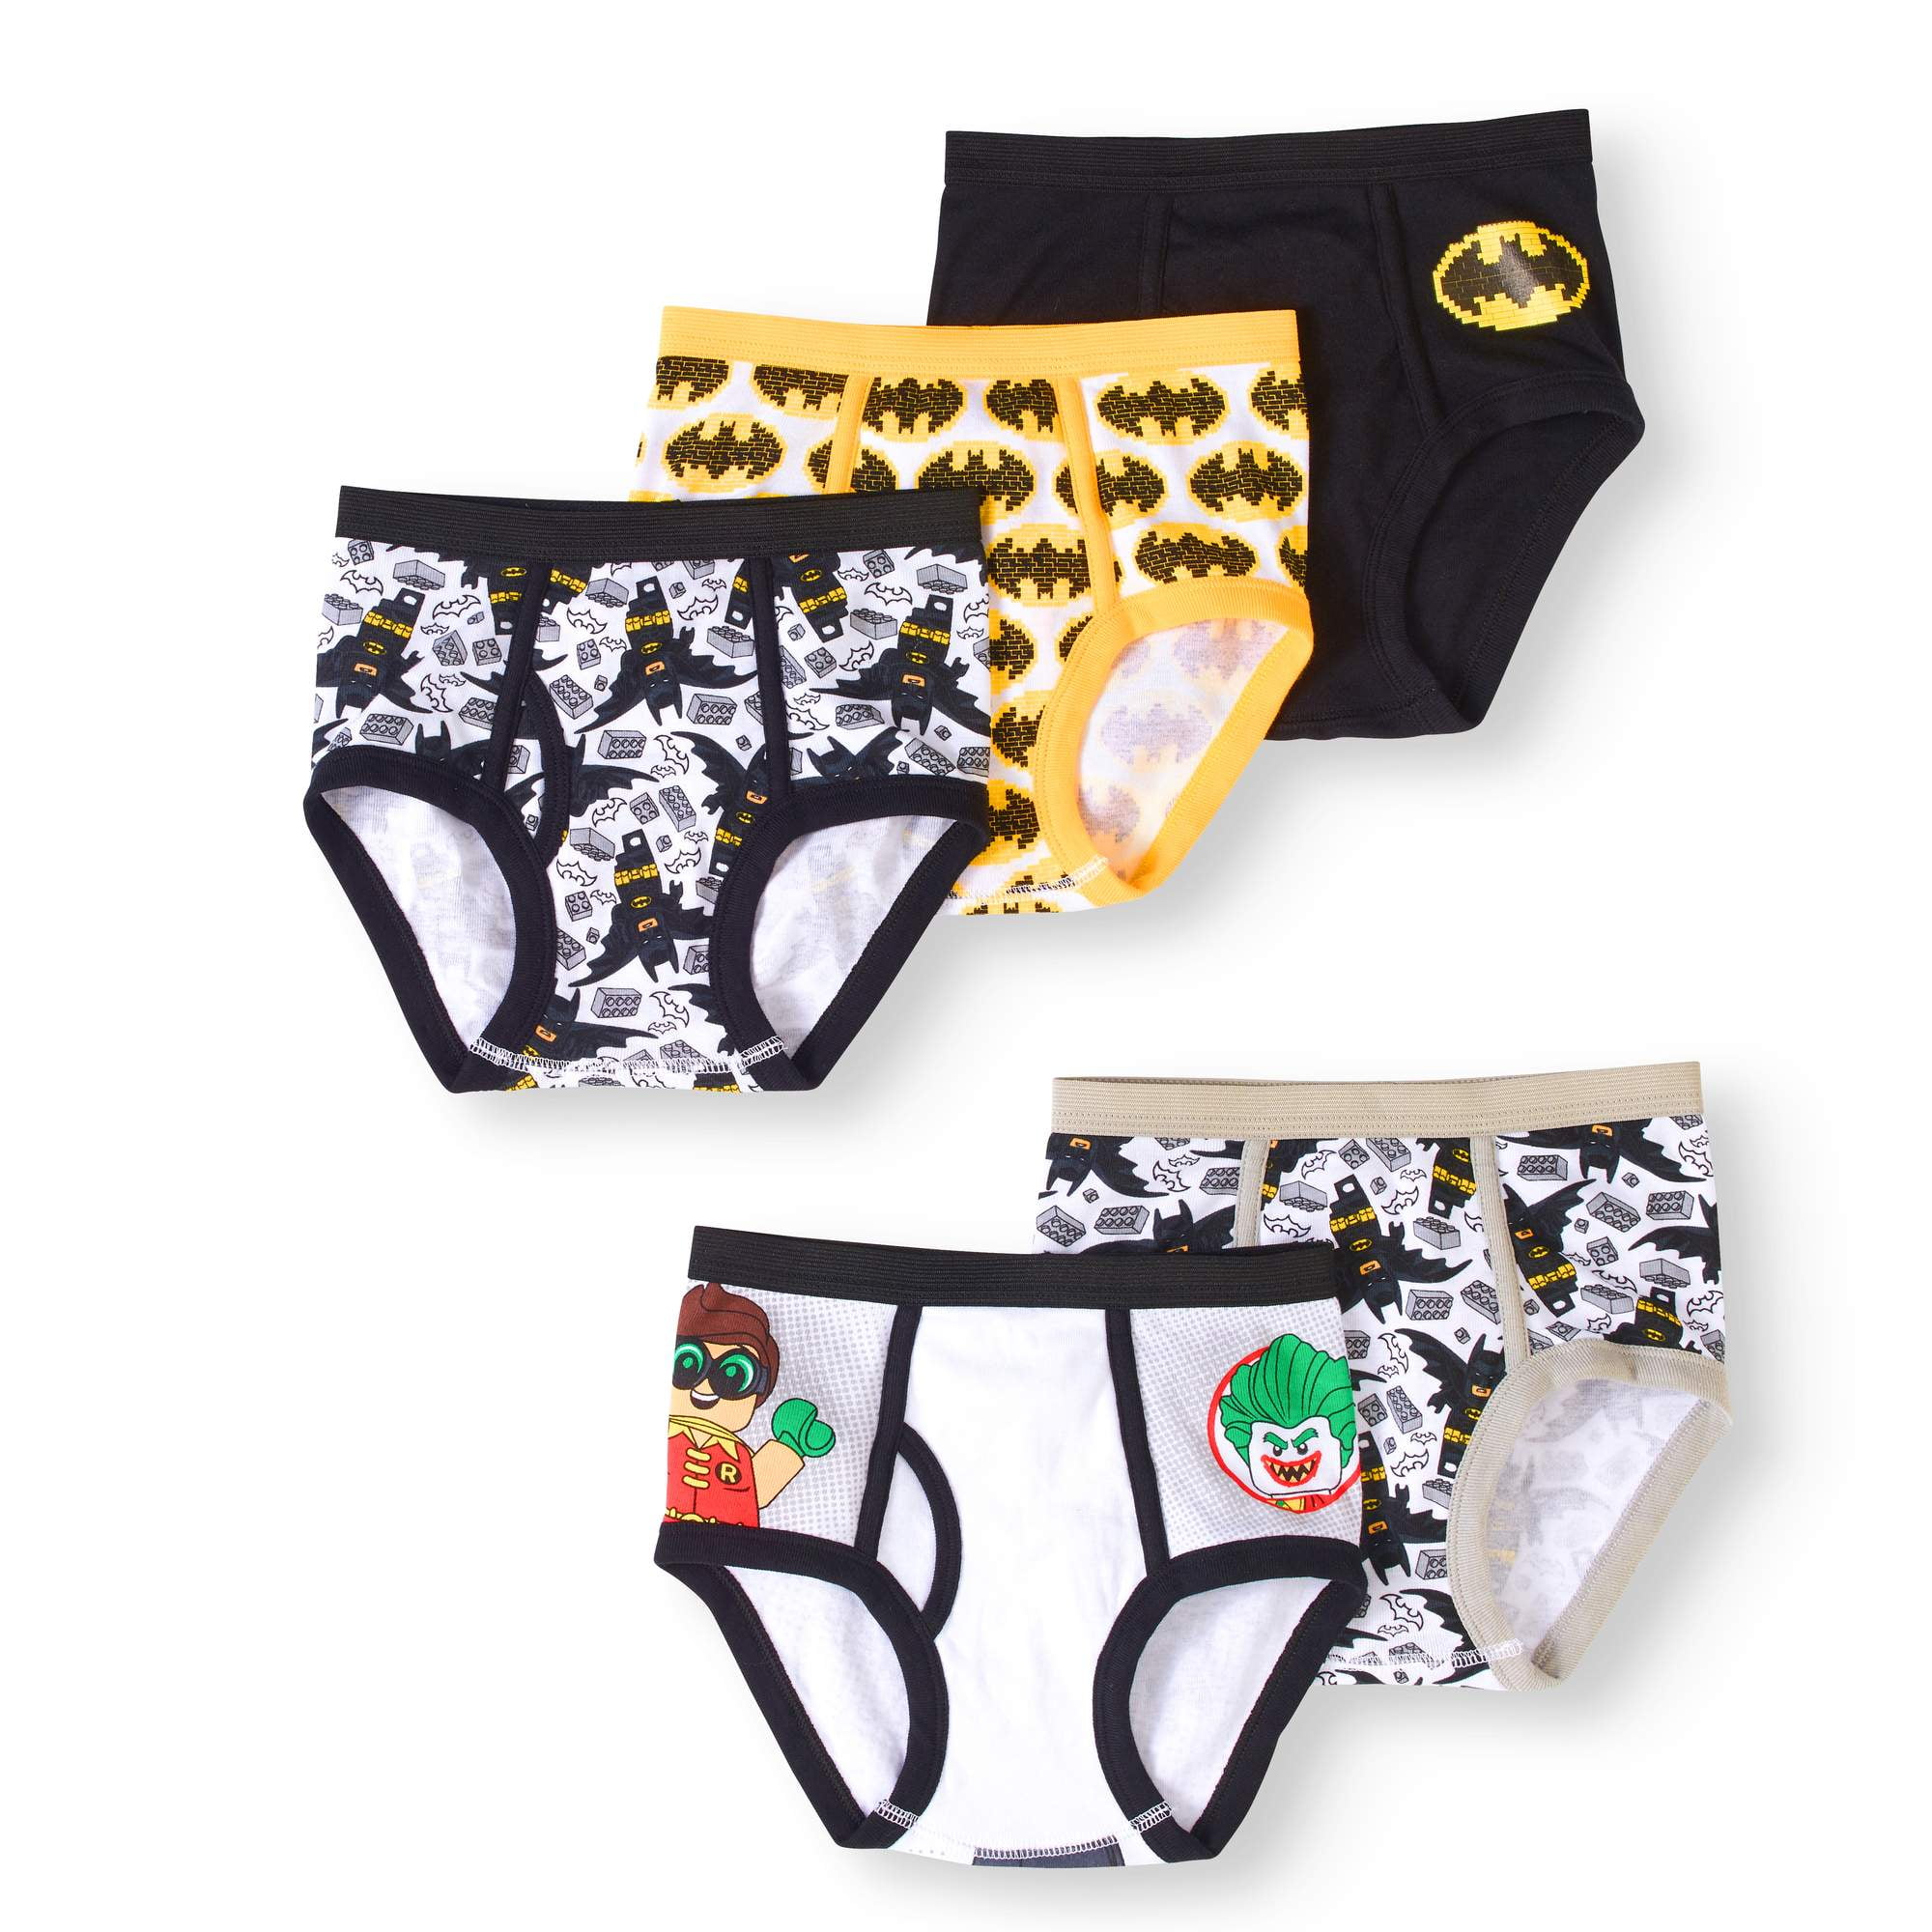 DC Comics Cotton Lego Batman Underwear Briefs FOR BOYS ASSORTED NEW! 5 PACK